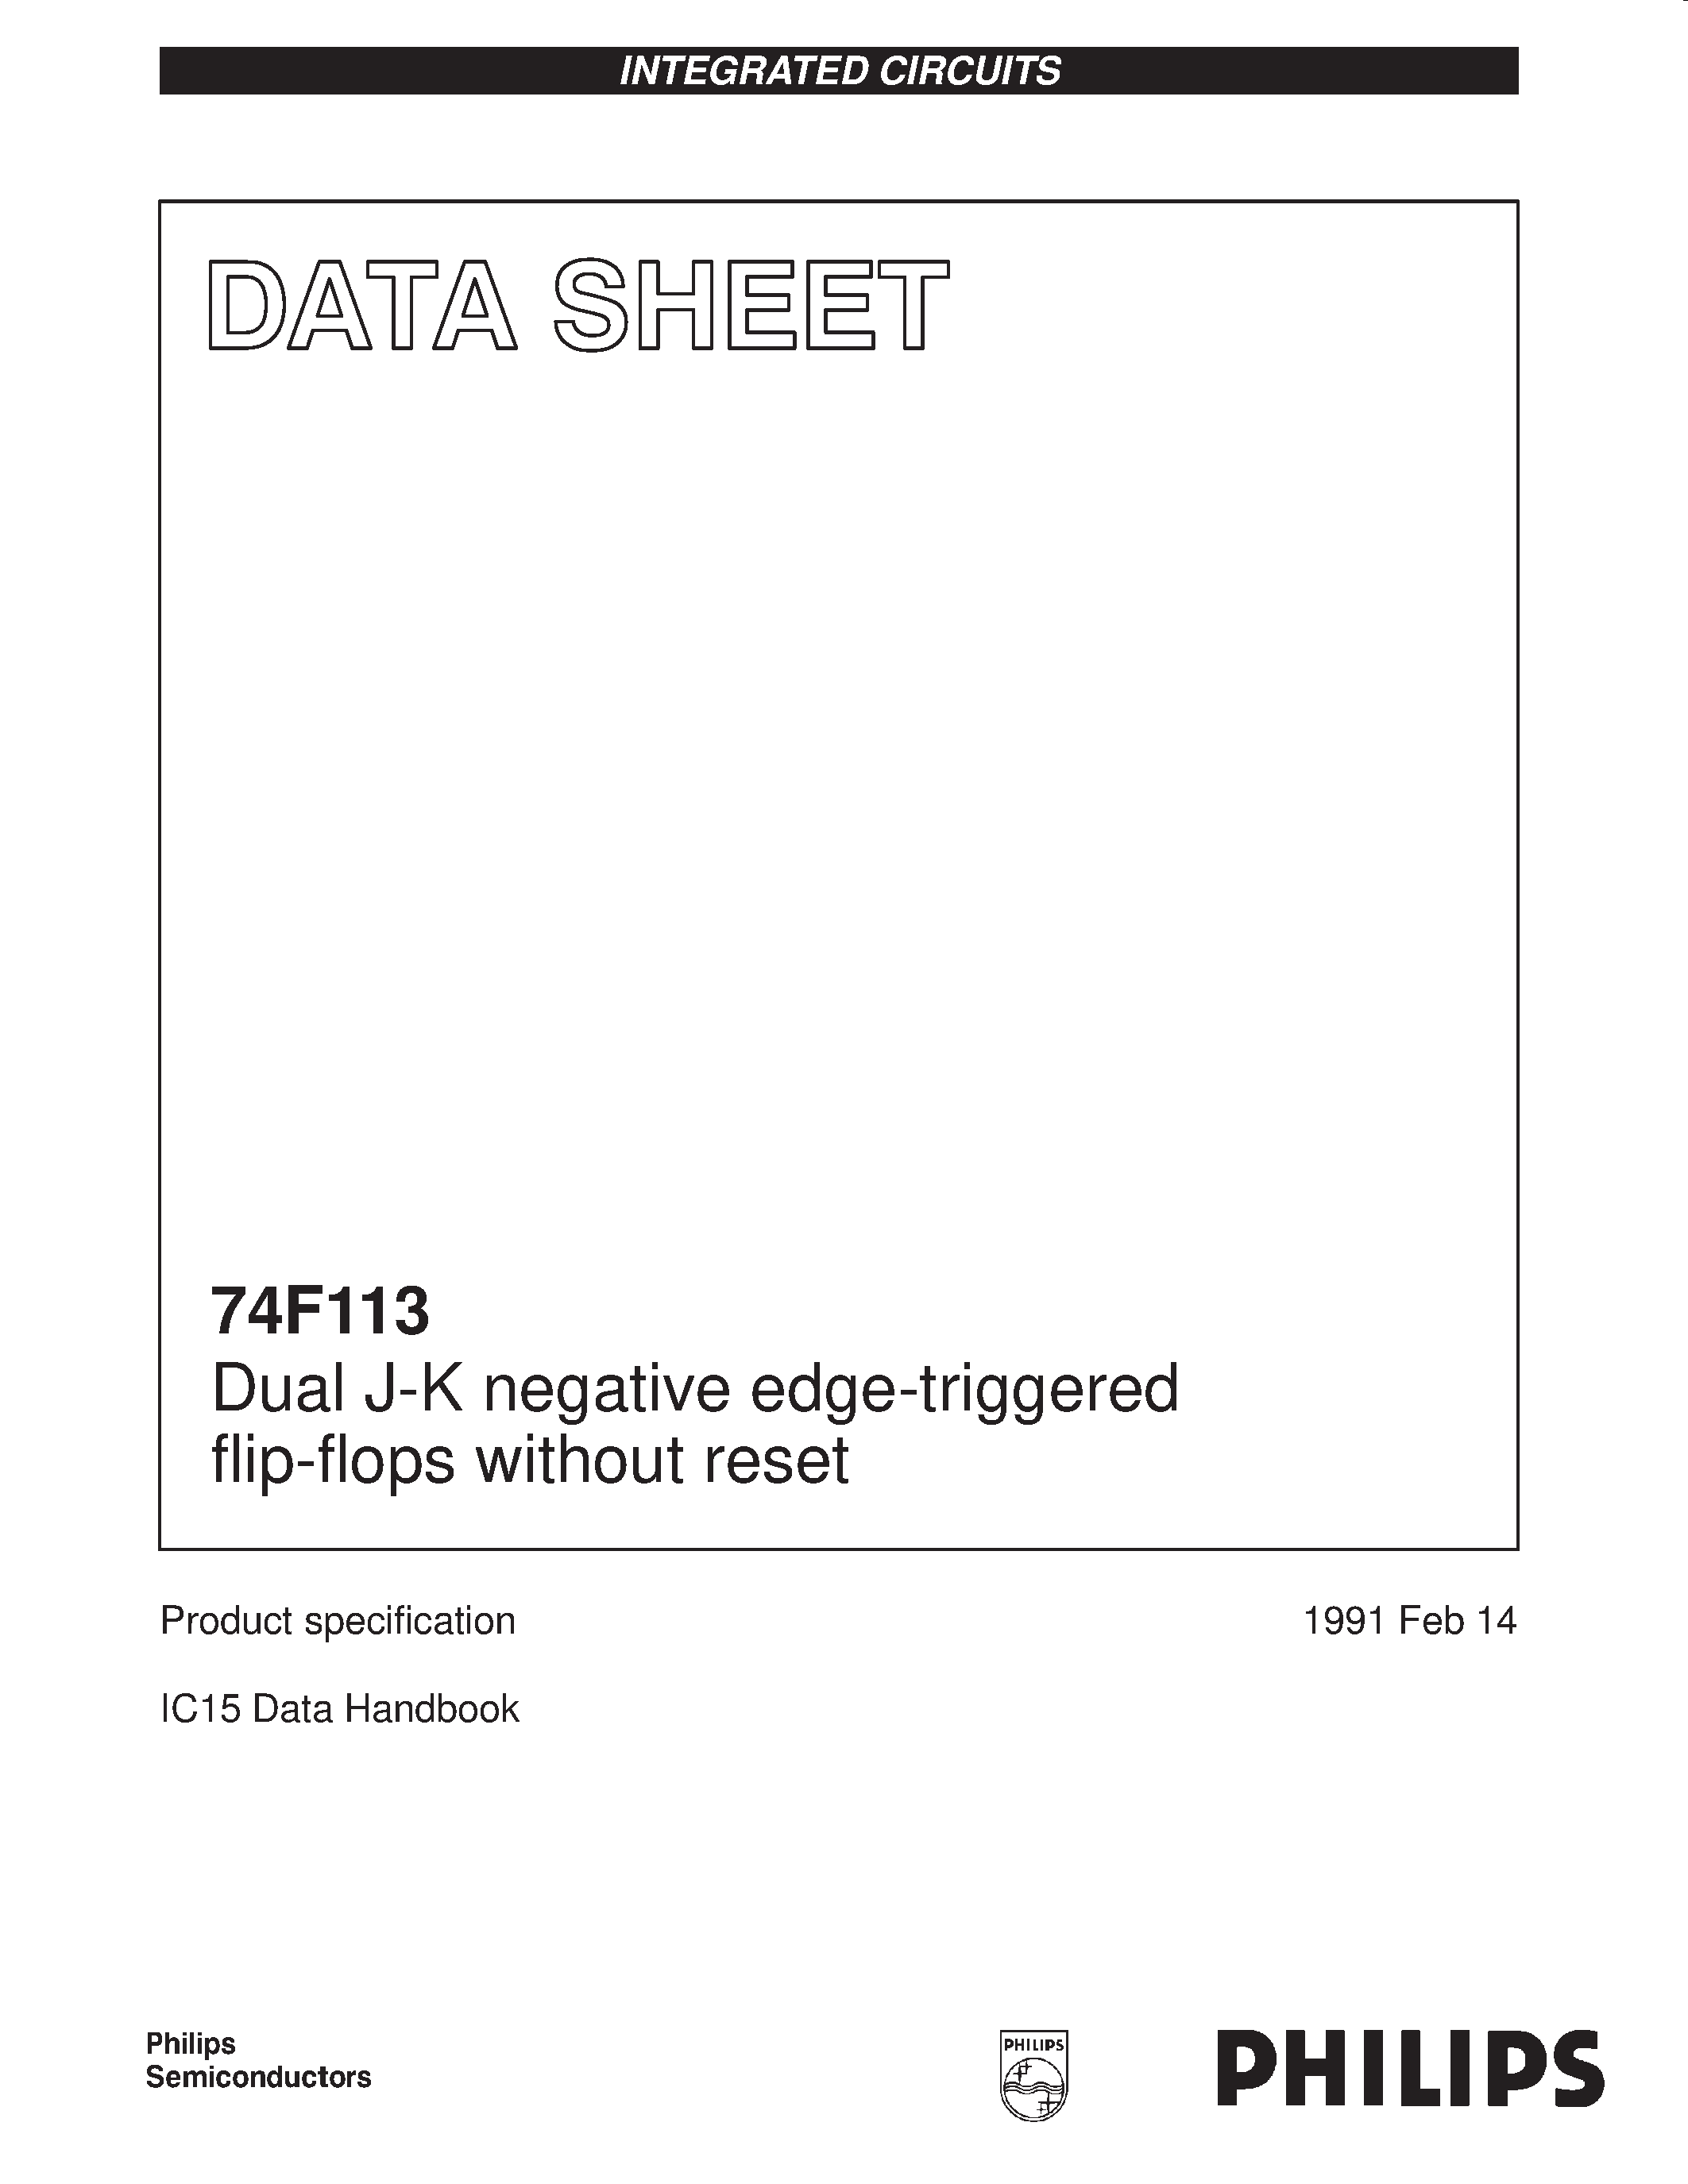 Даташит 74F113 - Dual J-K negative edge-triggered flip-flops without reset страница 1